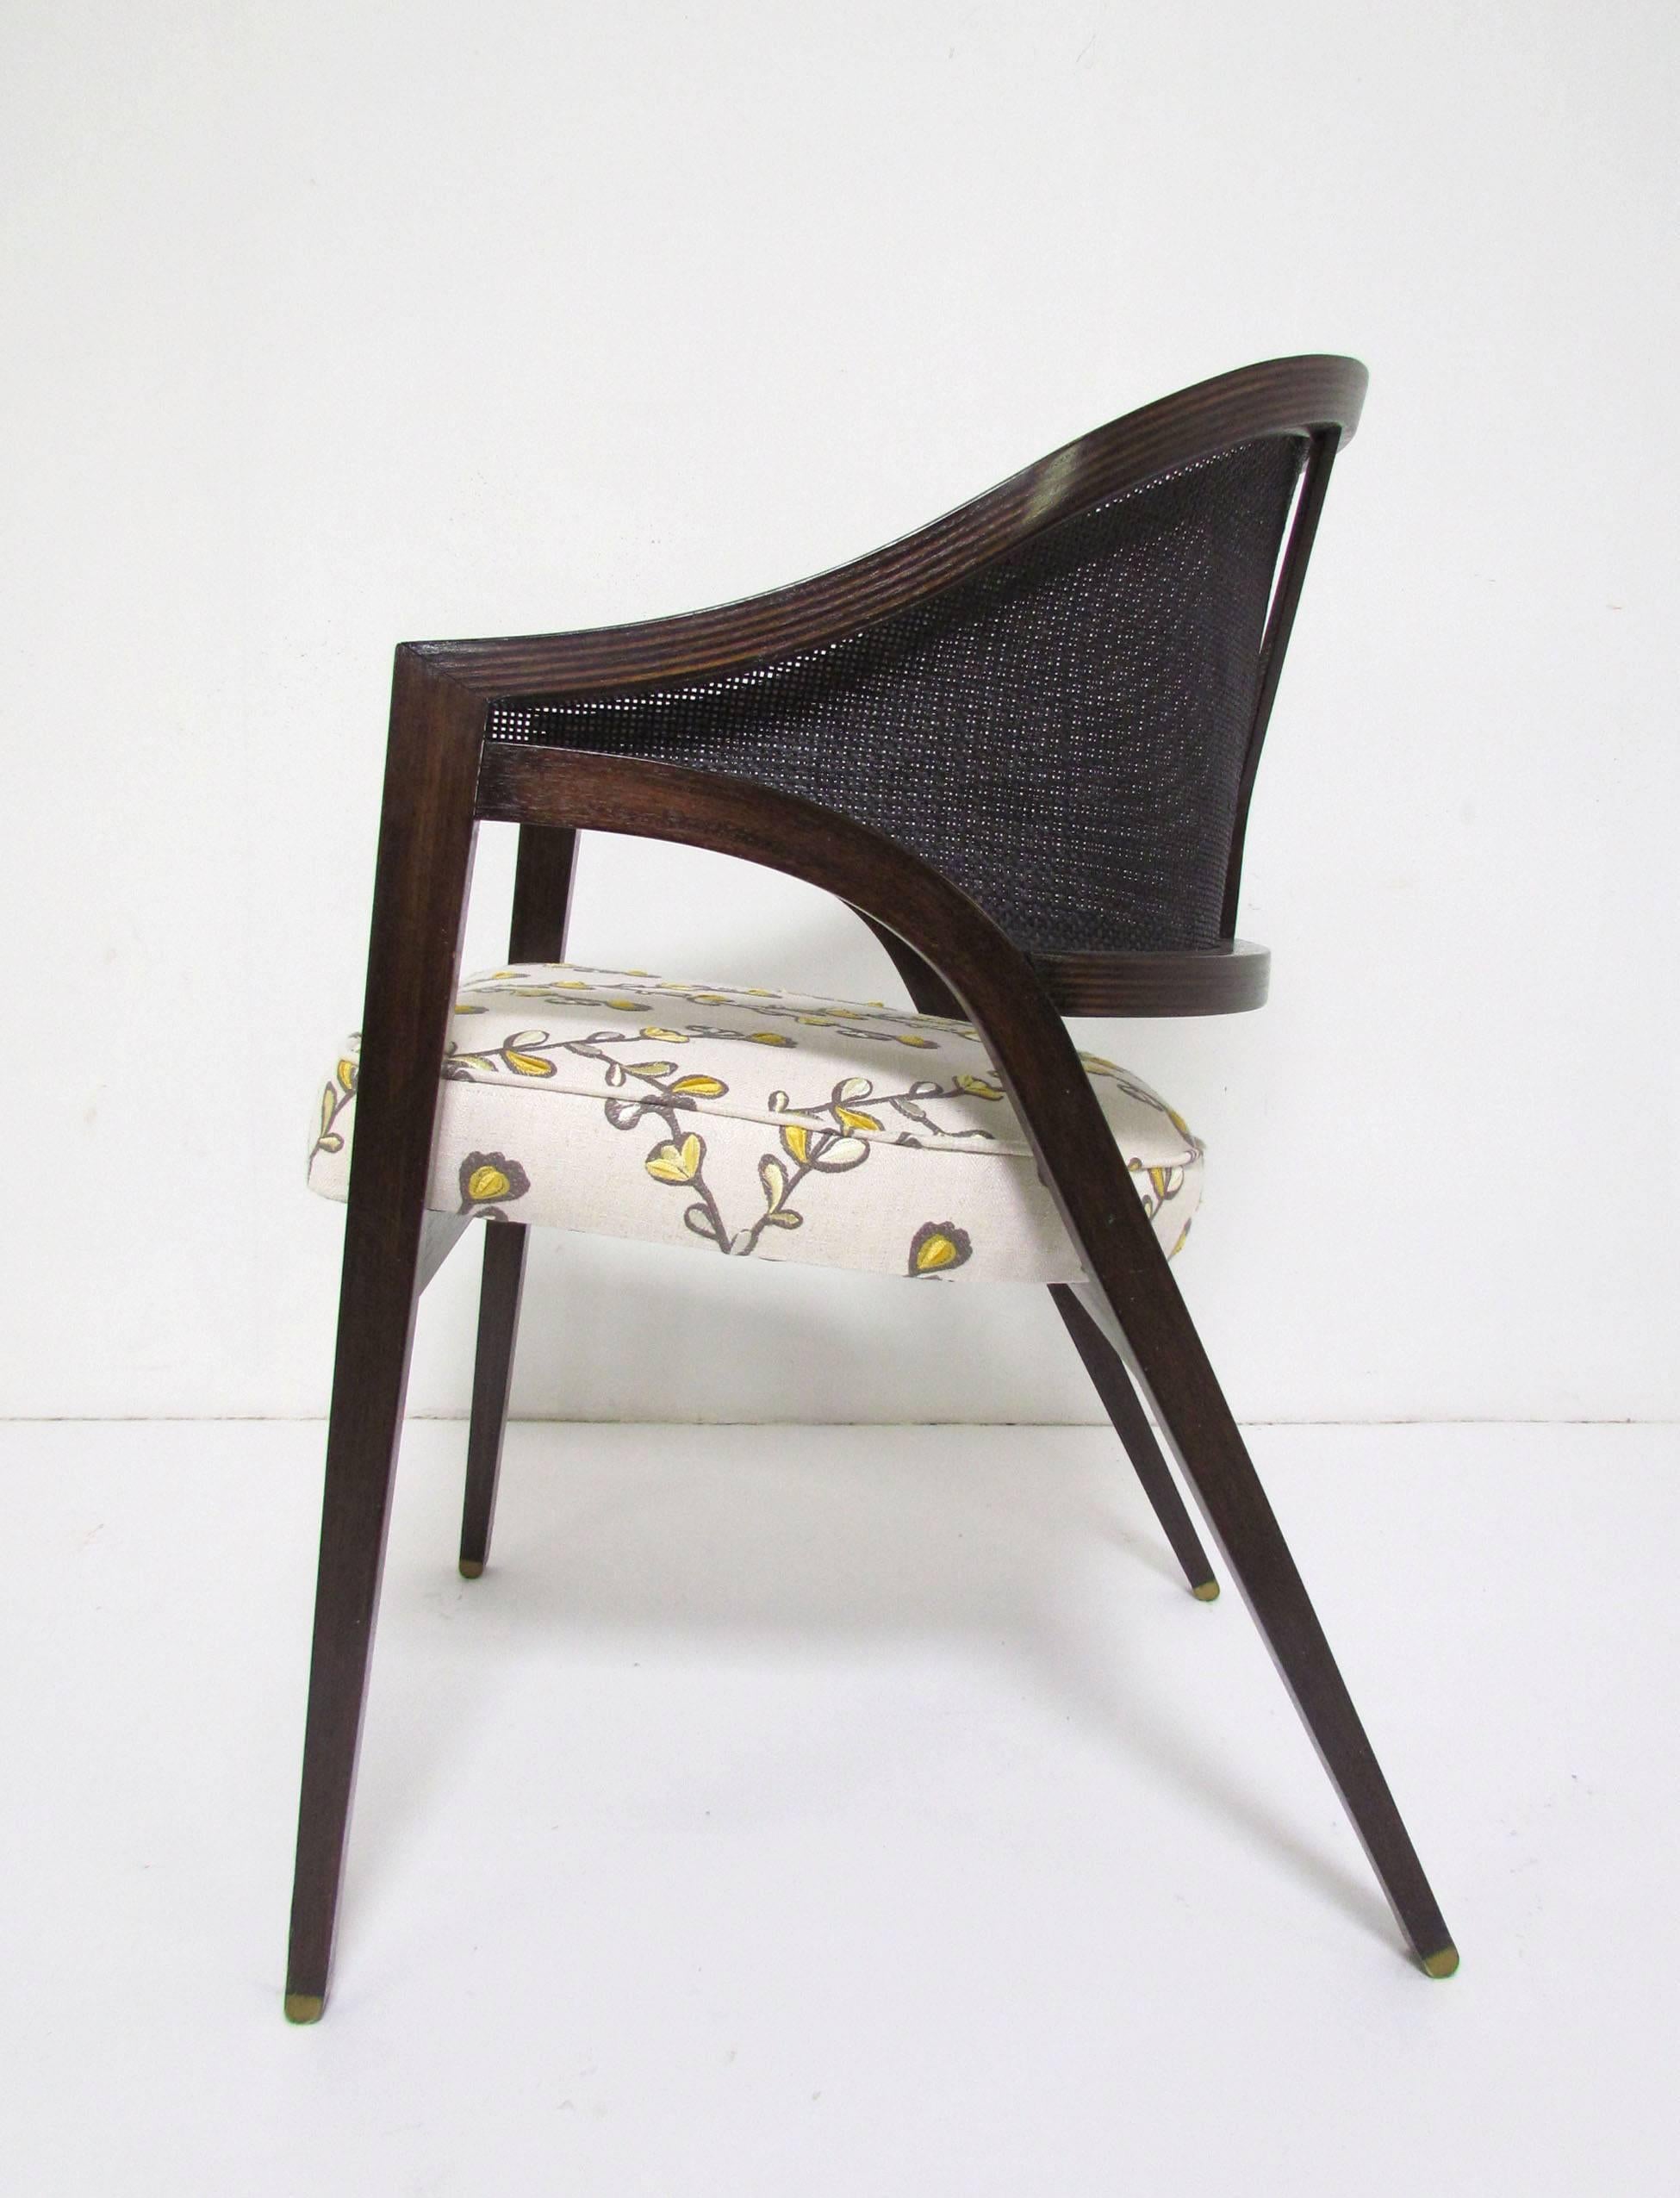 Armchair designed by Edward Wormley for Dunbar, 